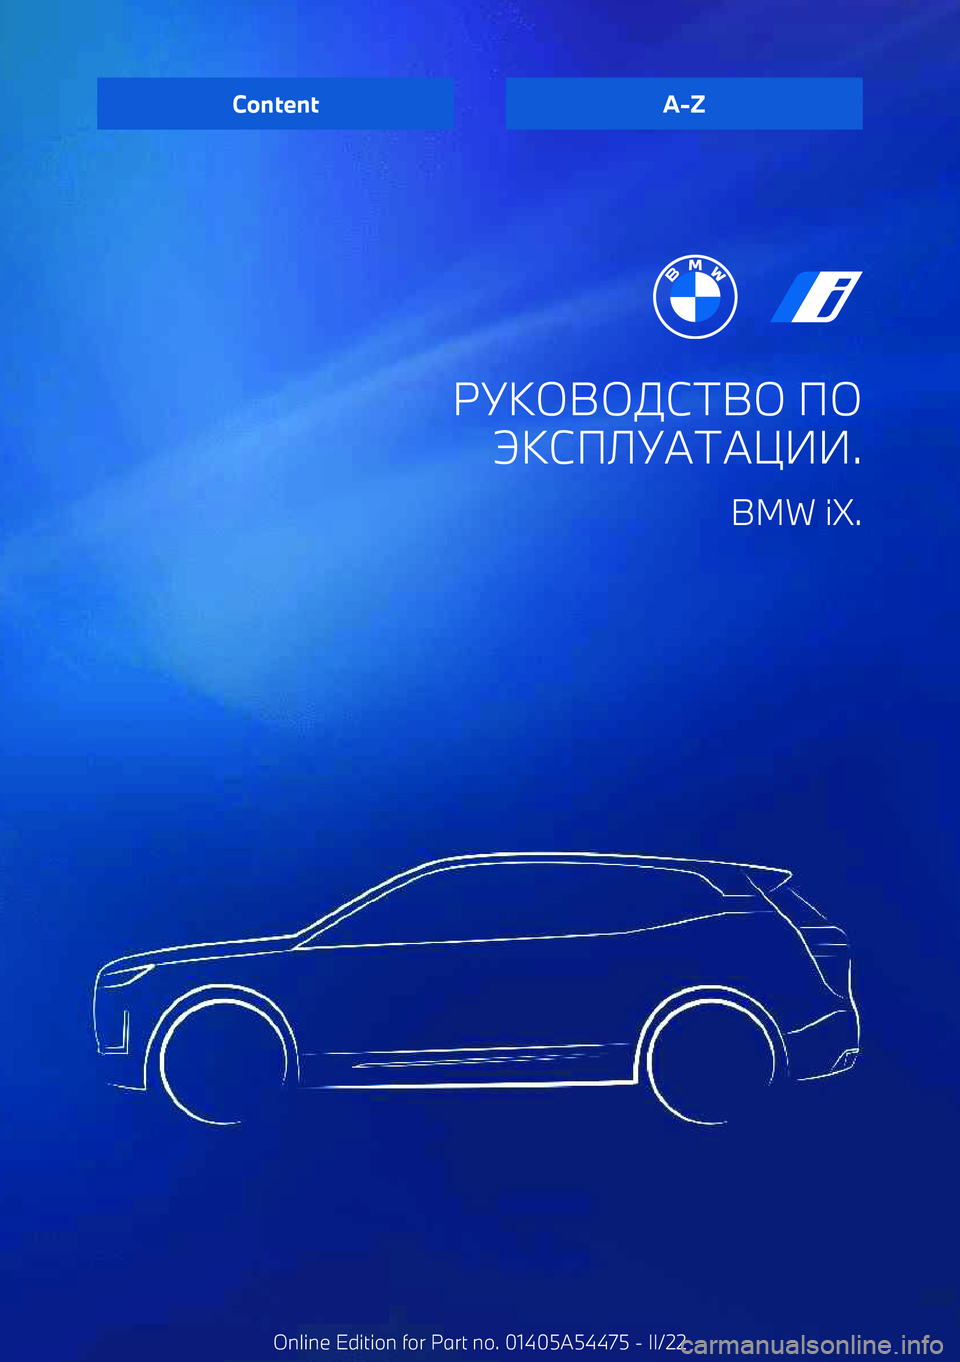 BMW IX 2022  Руково СТ 
С !Т!"## .
BMW iX.ContentA